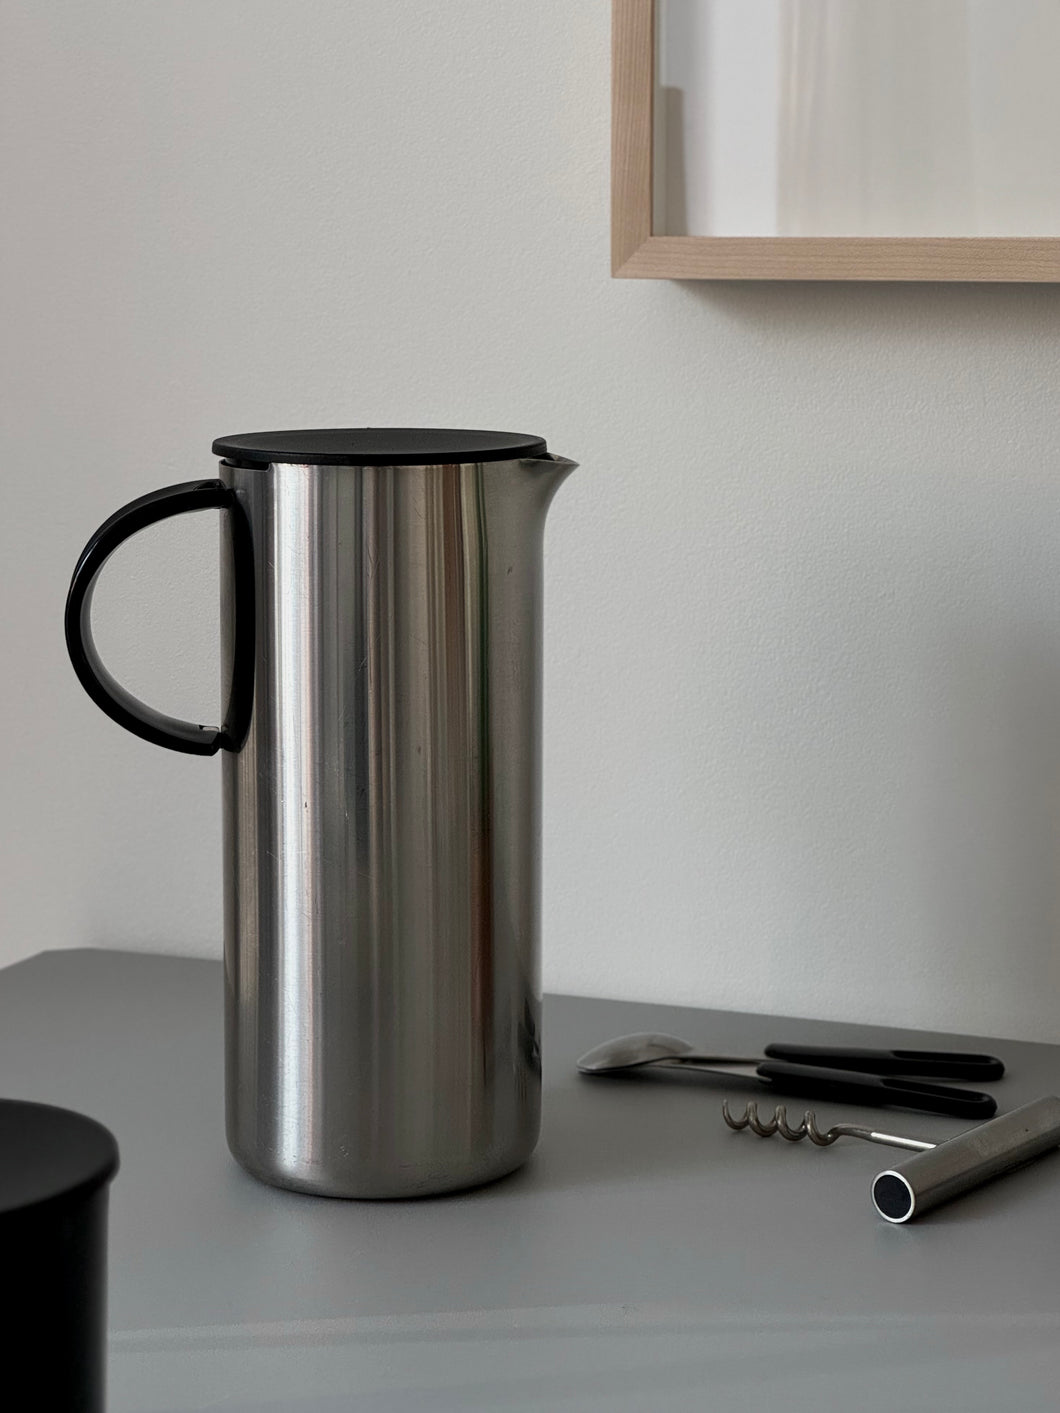 Stainless steel juice jug by Erik Magnussen for Stelton